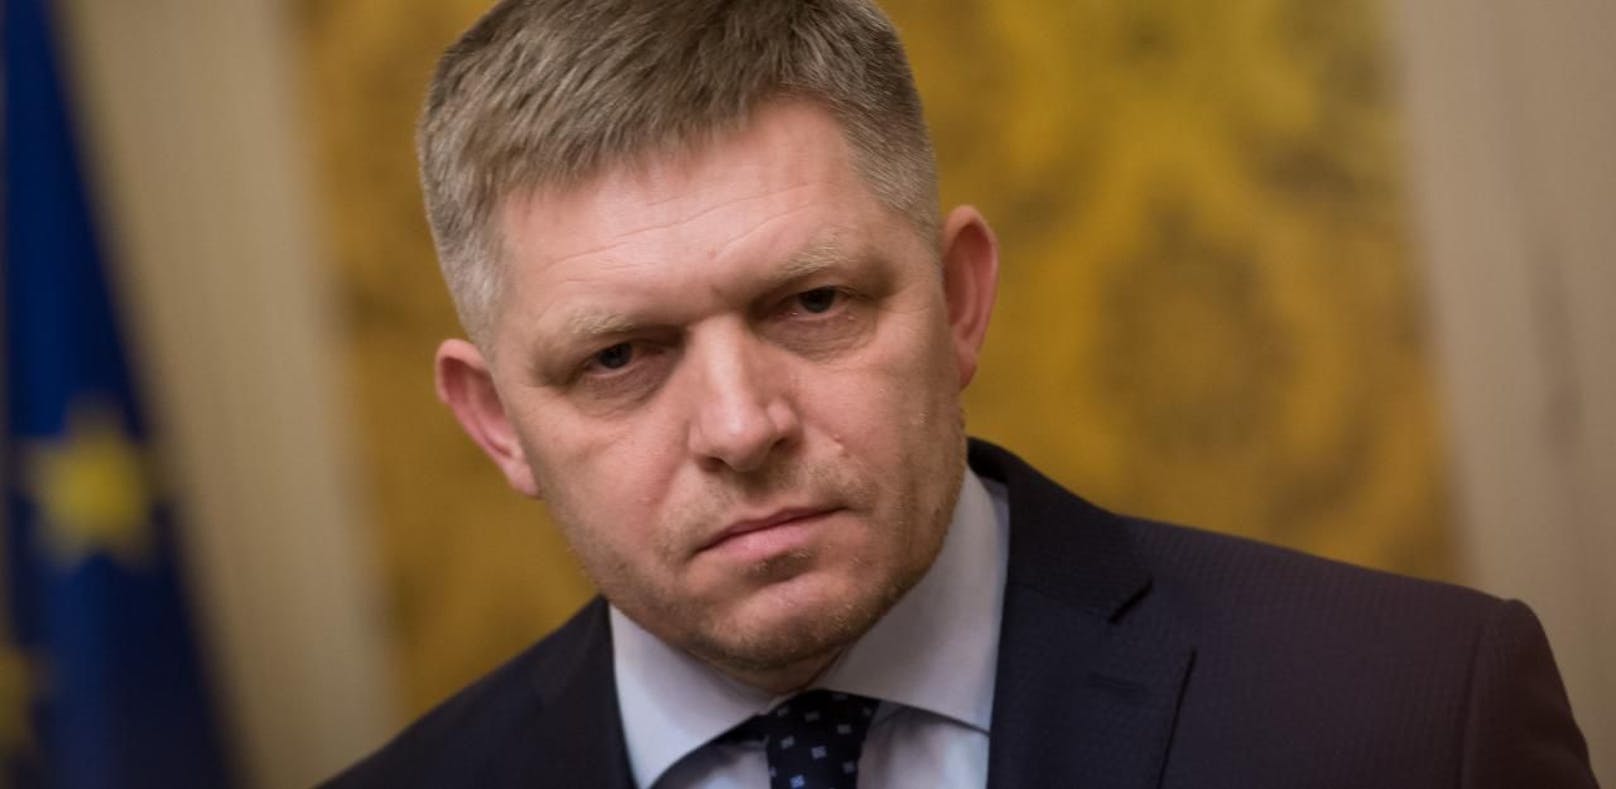 Der slowakische Ministerpräsident Robert Fico hat seinen Rücktritt angeboten